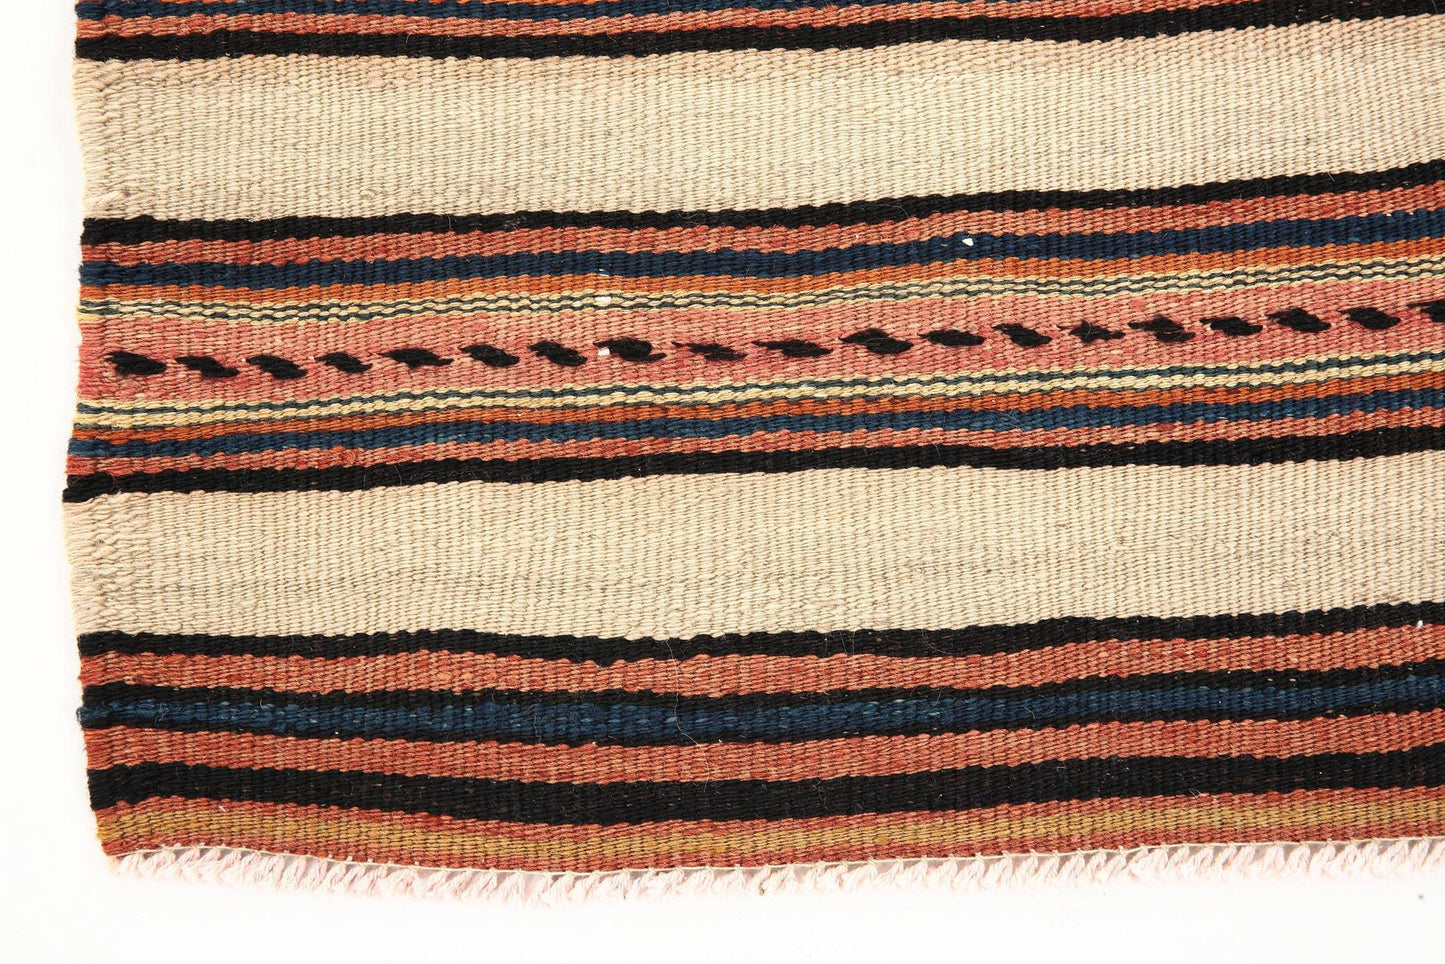 2' x 3' Tan-Ivory Turkish Kilim Old Rug  |  RugReform